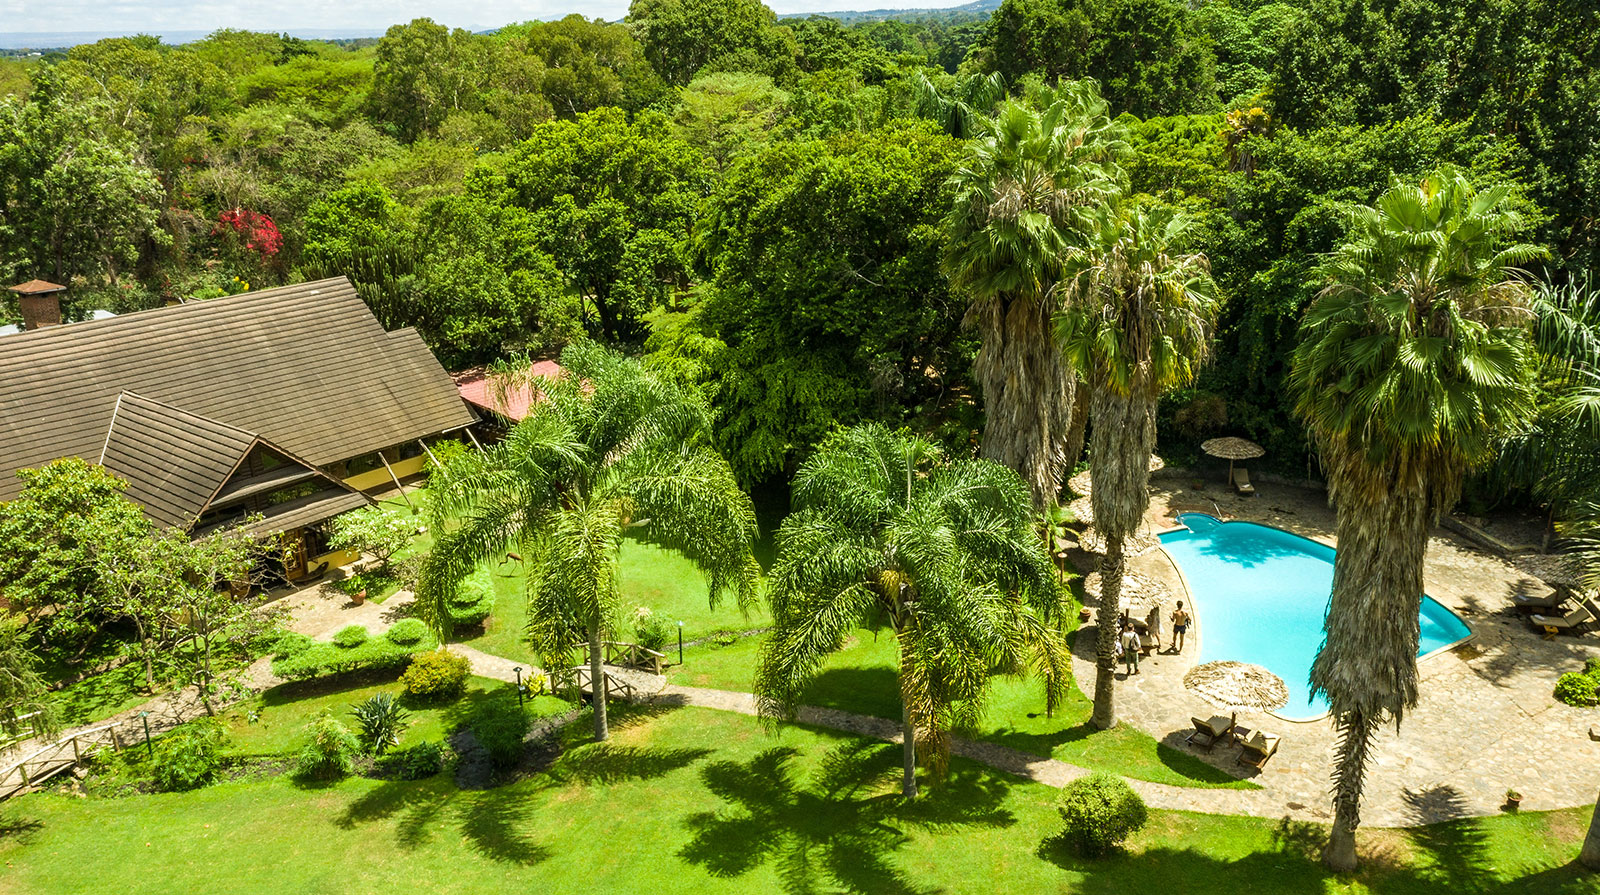 Arumeru Lodge - Green oasis near Arusha